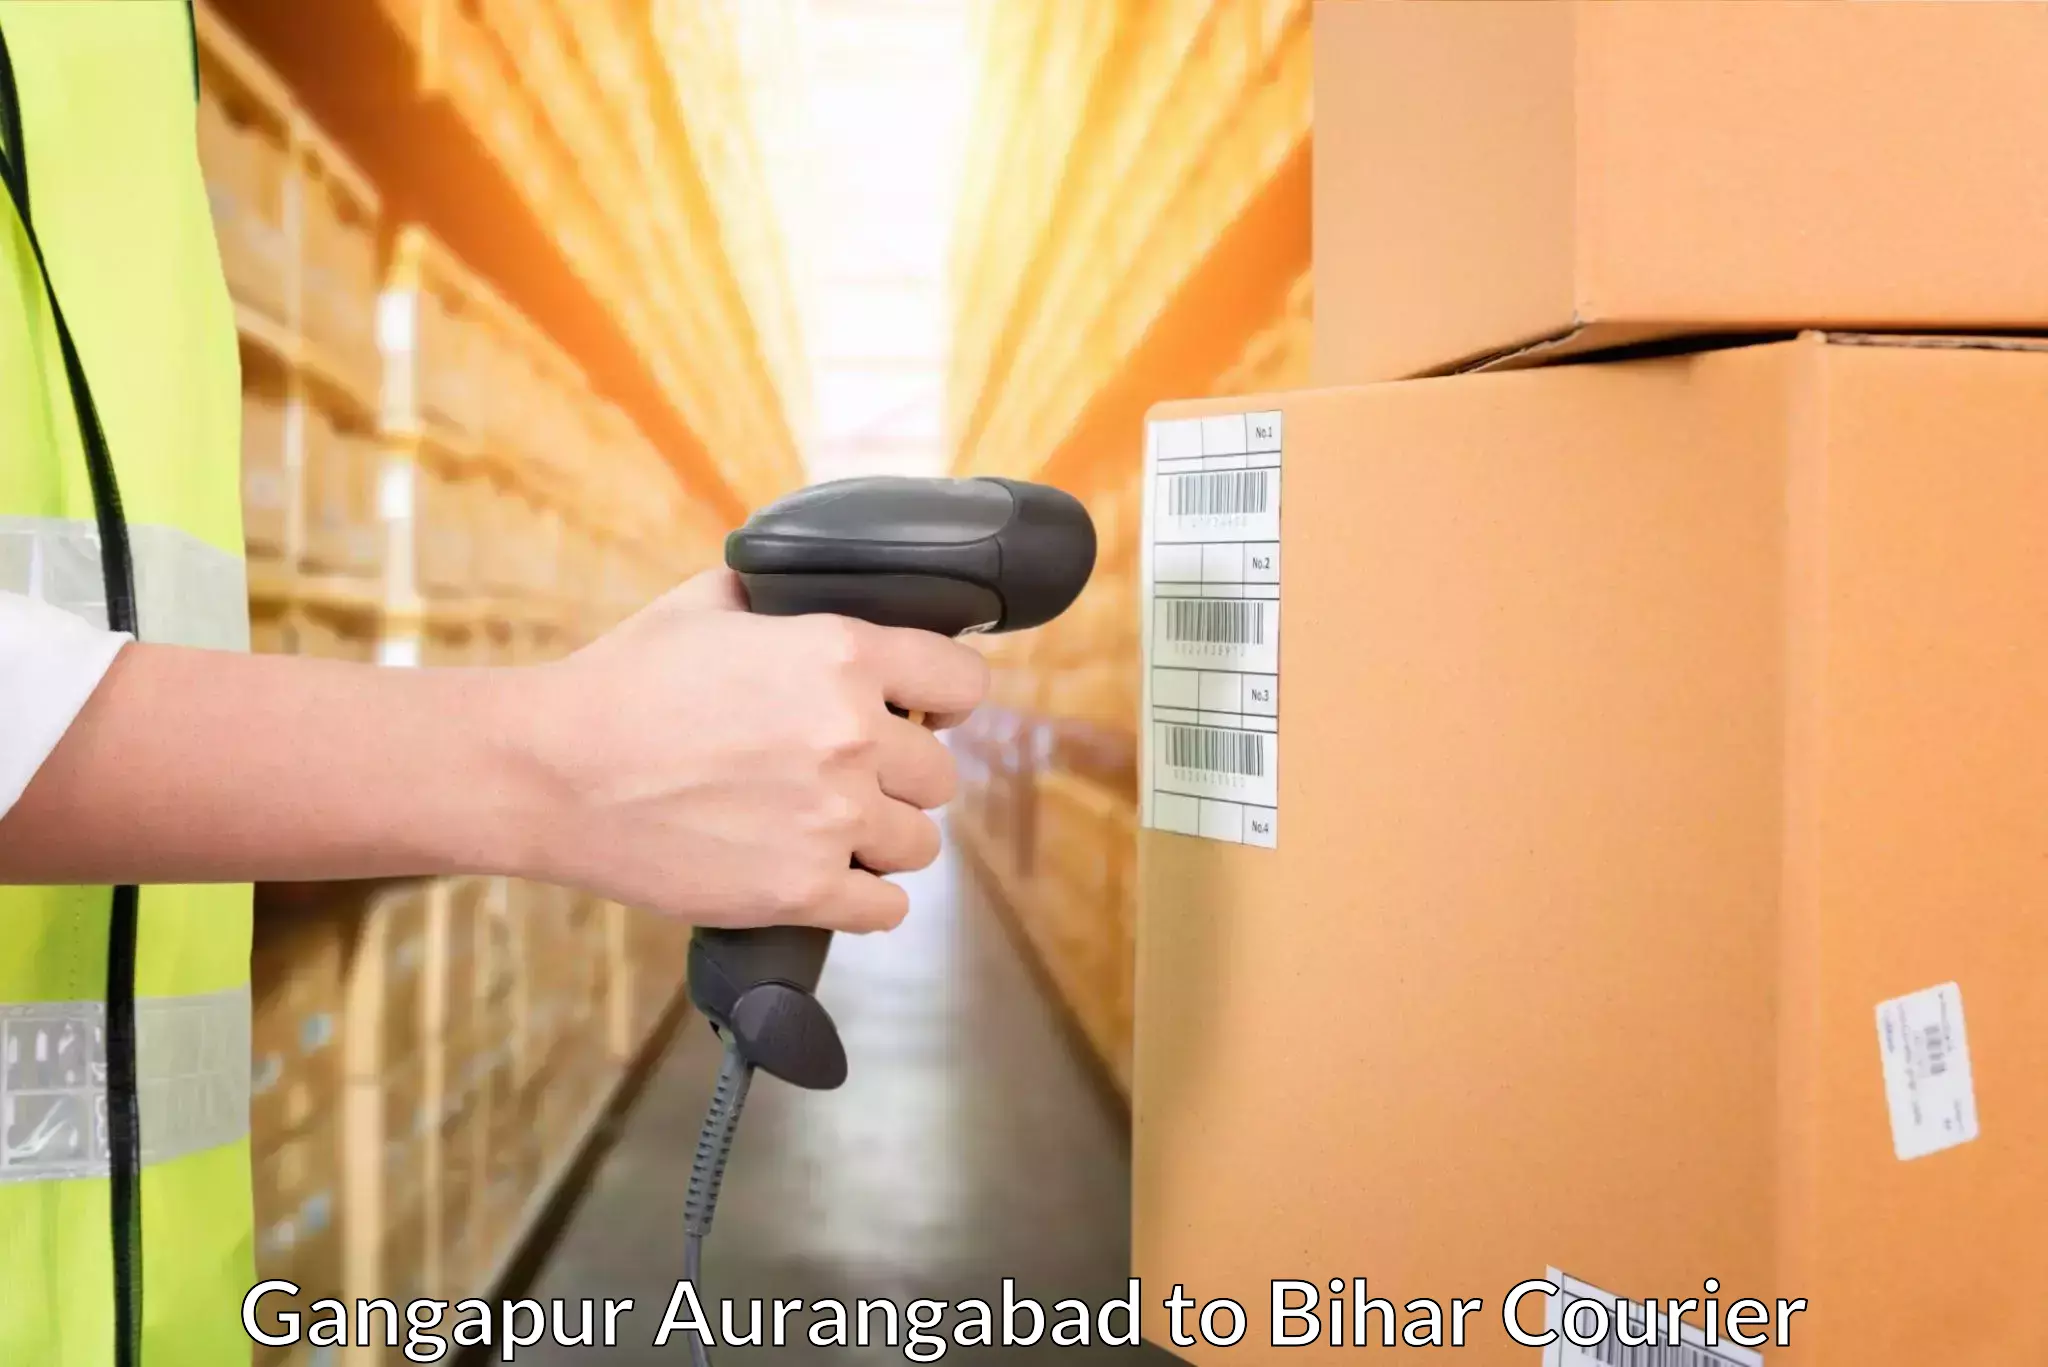 Bulk courier orders Gangapur Aurangabad to Sheikhpura